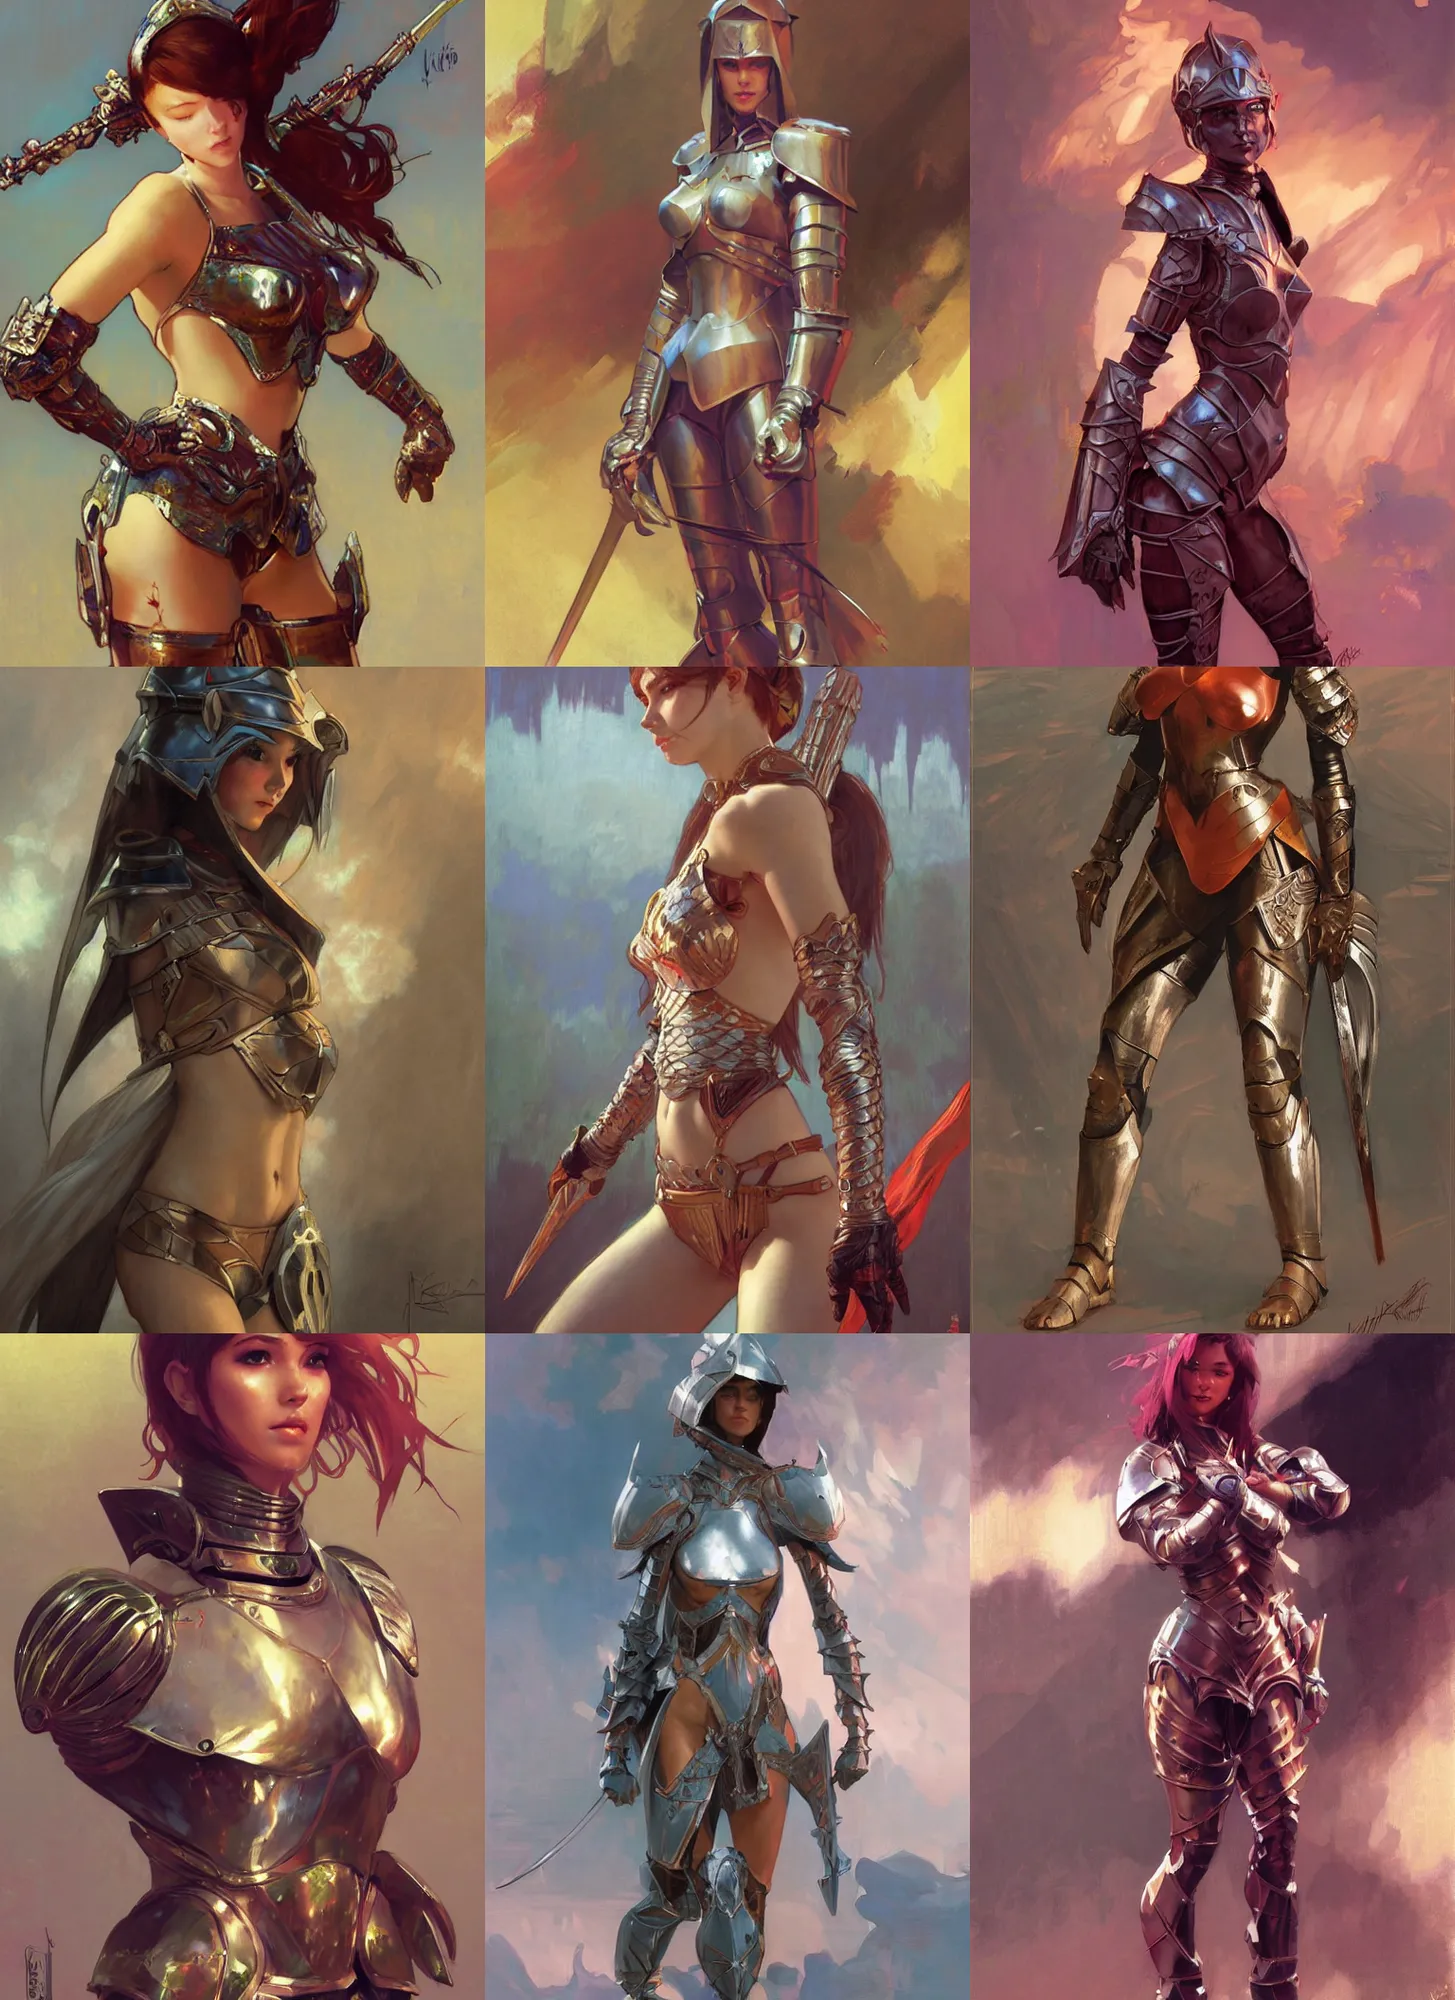 Prompt: bikini armor female knight, elegant, vibrant, fantasy, medieval, smooth, by ilya kuvshinov, craig mullins, edgar maxence, alphonse mucha, artgerm